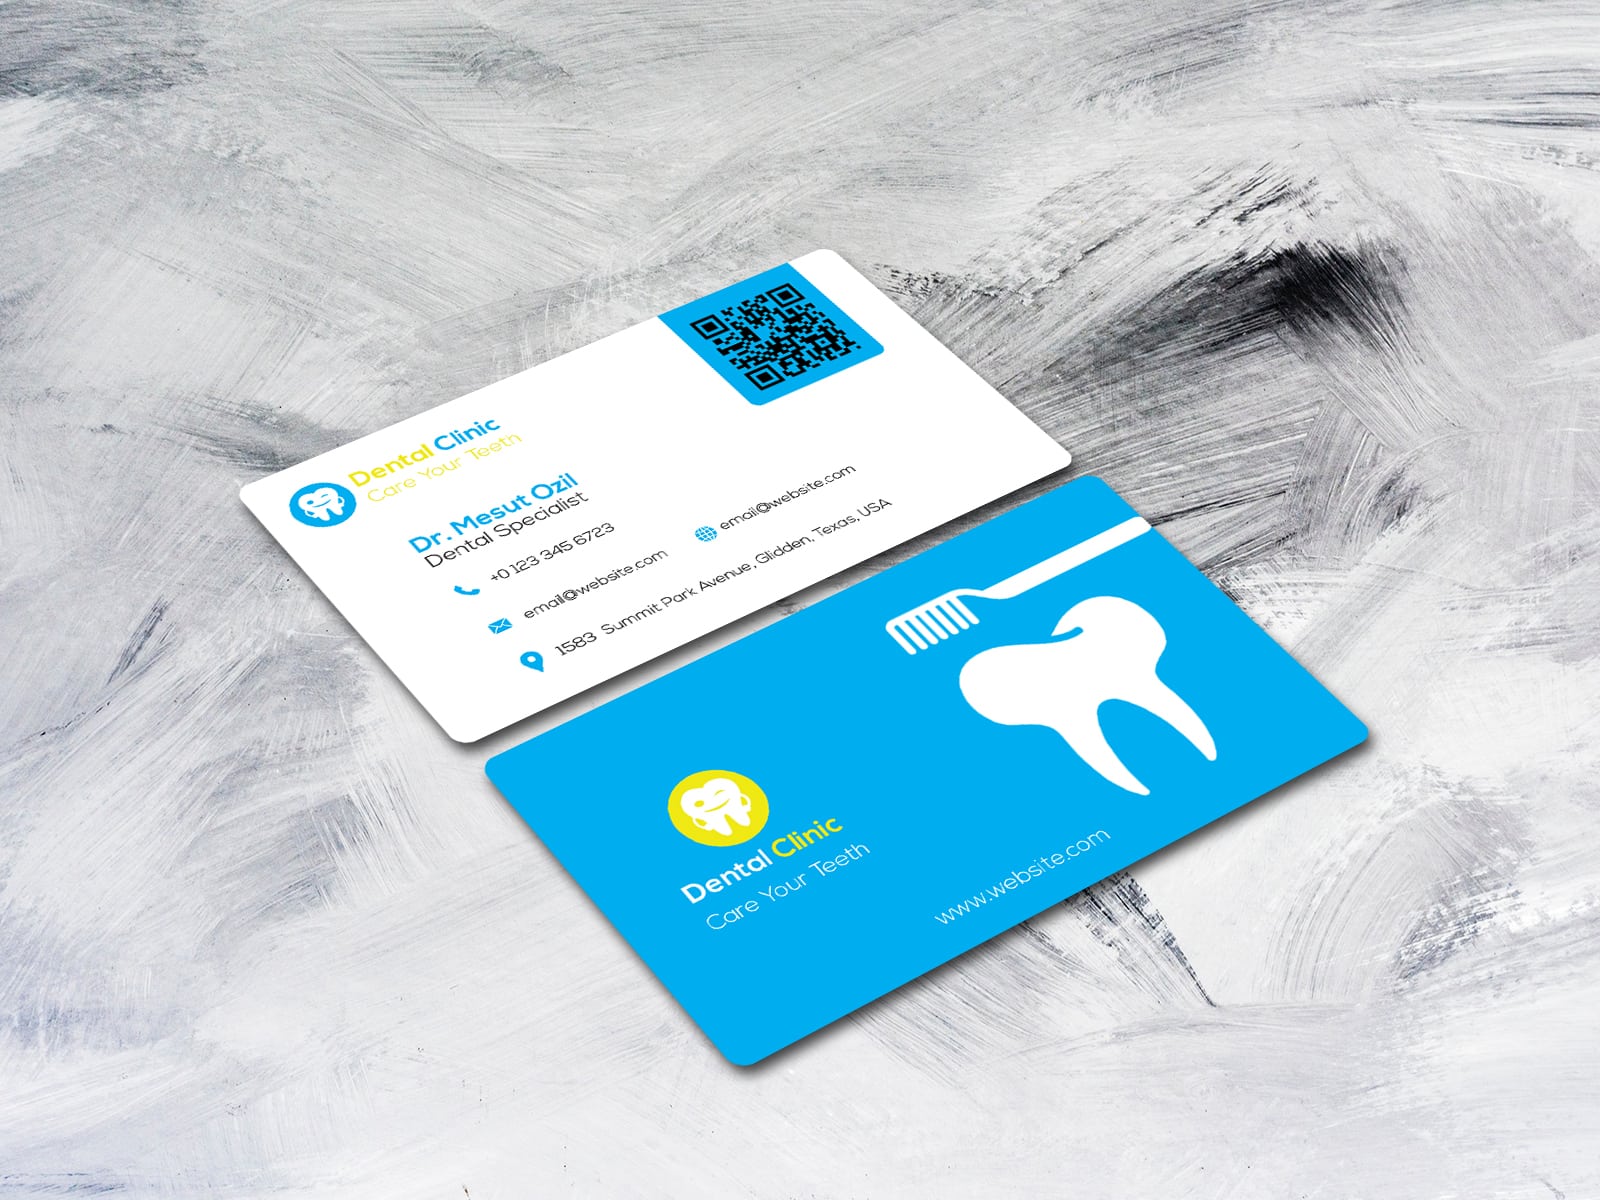 Dentist Business Card Design